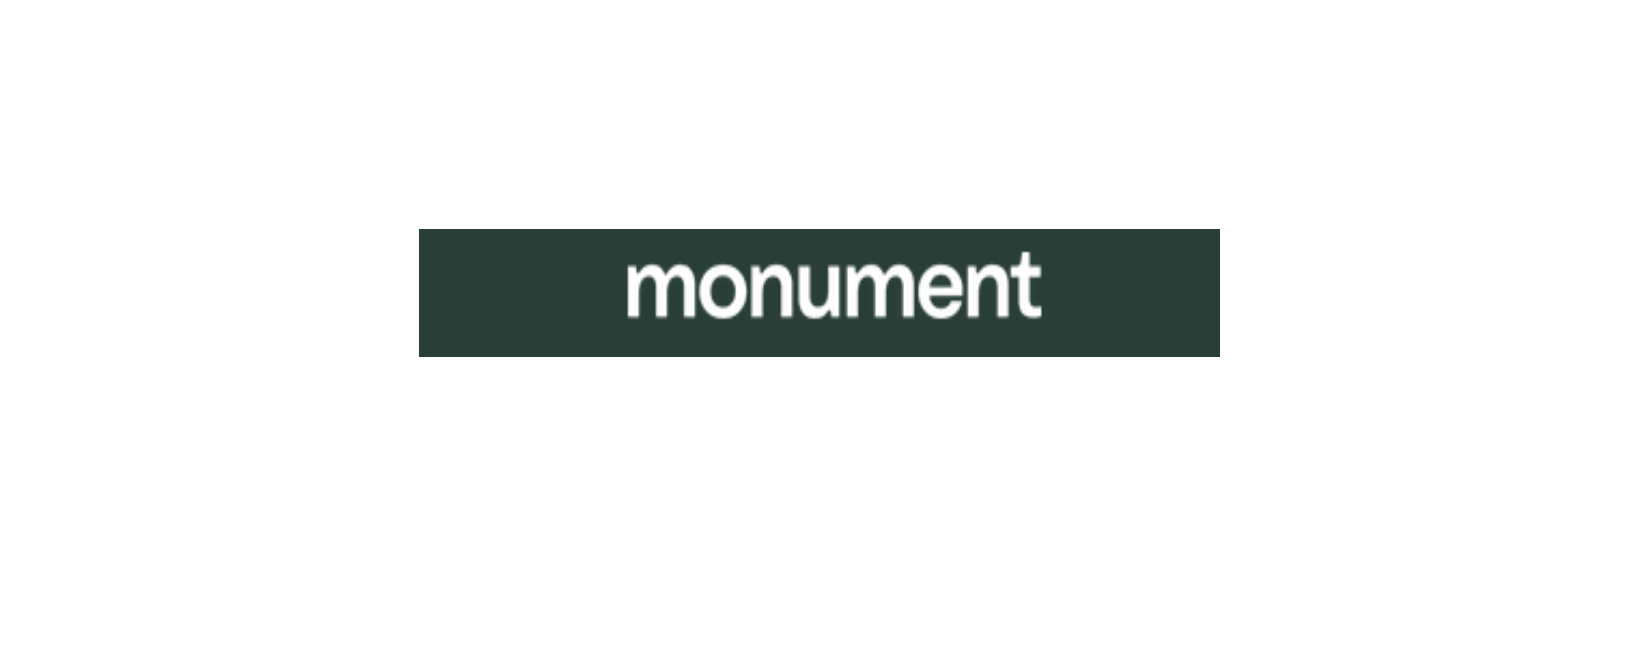 Monument Discount Code 2022